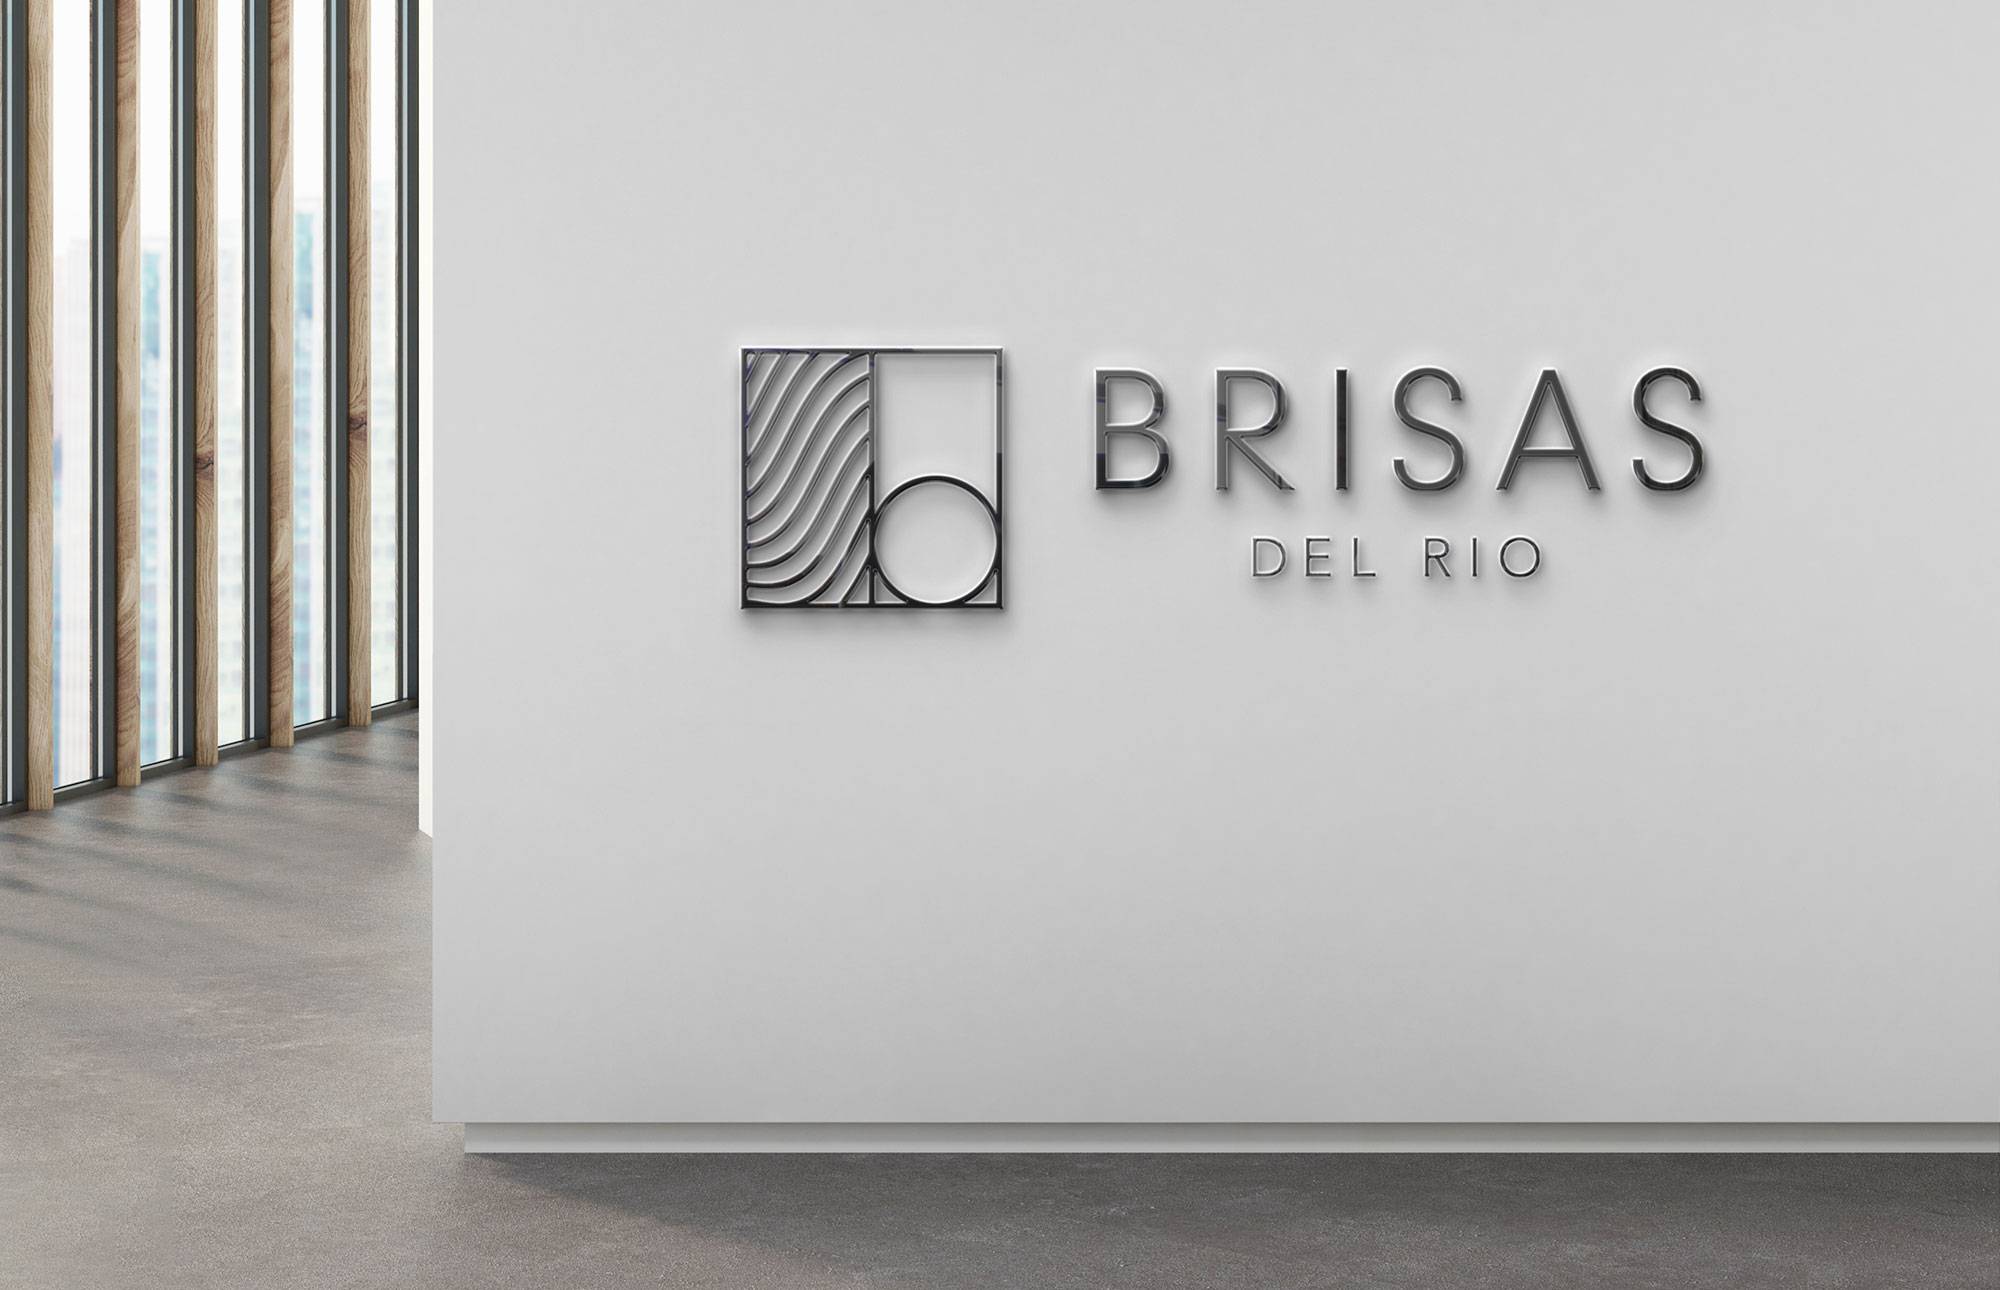 brisas branding wall sign